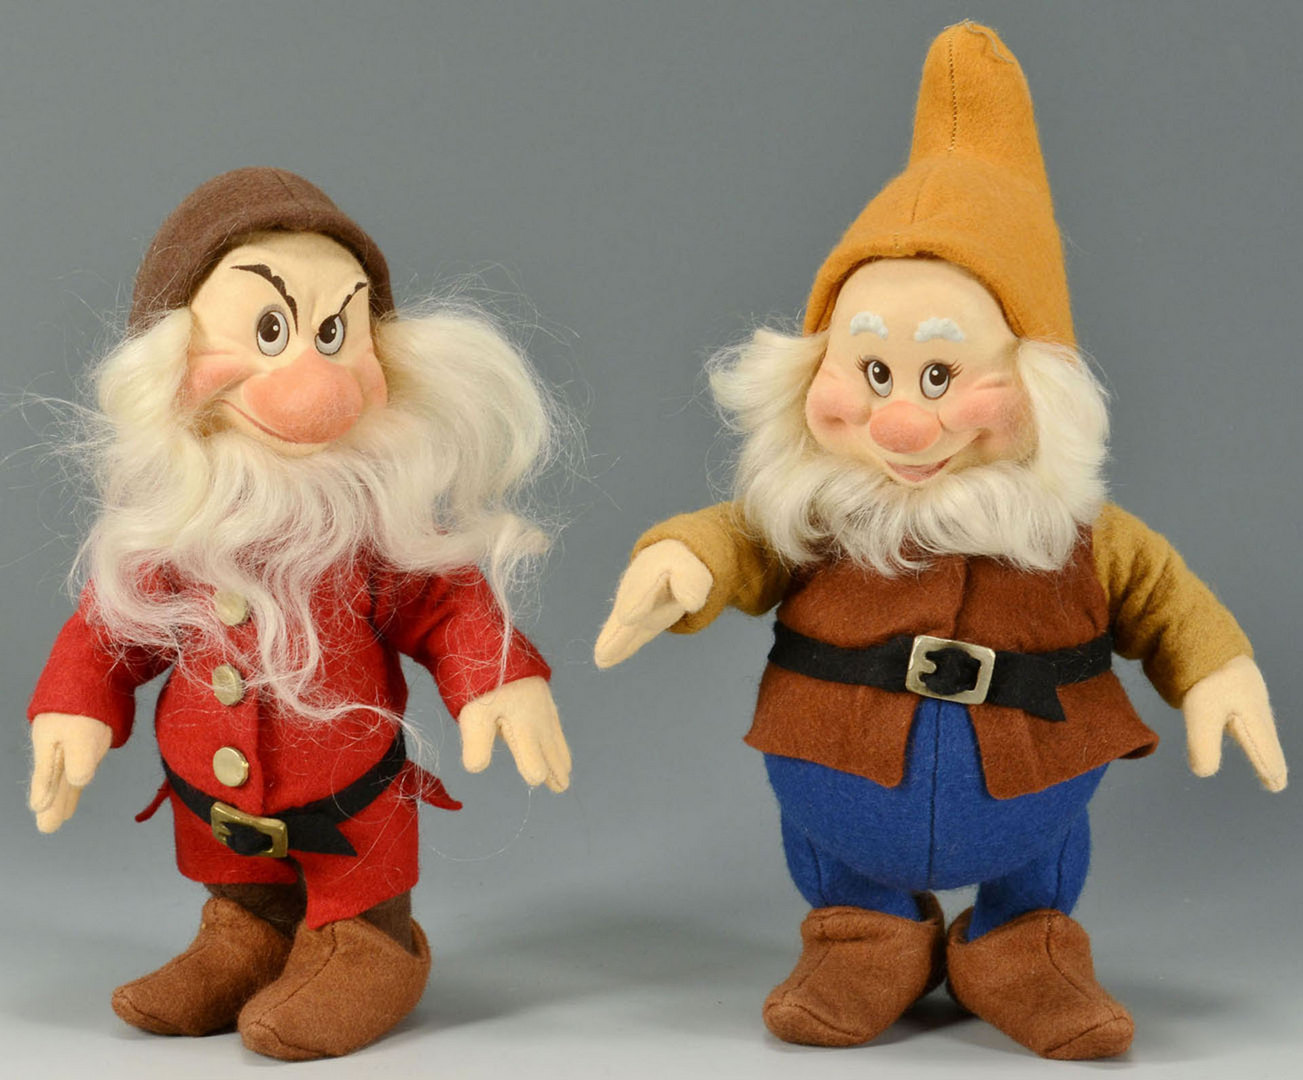 Lot 656: Snow White and Dwarfs Felt Dolls by John Wright